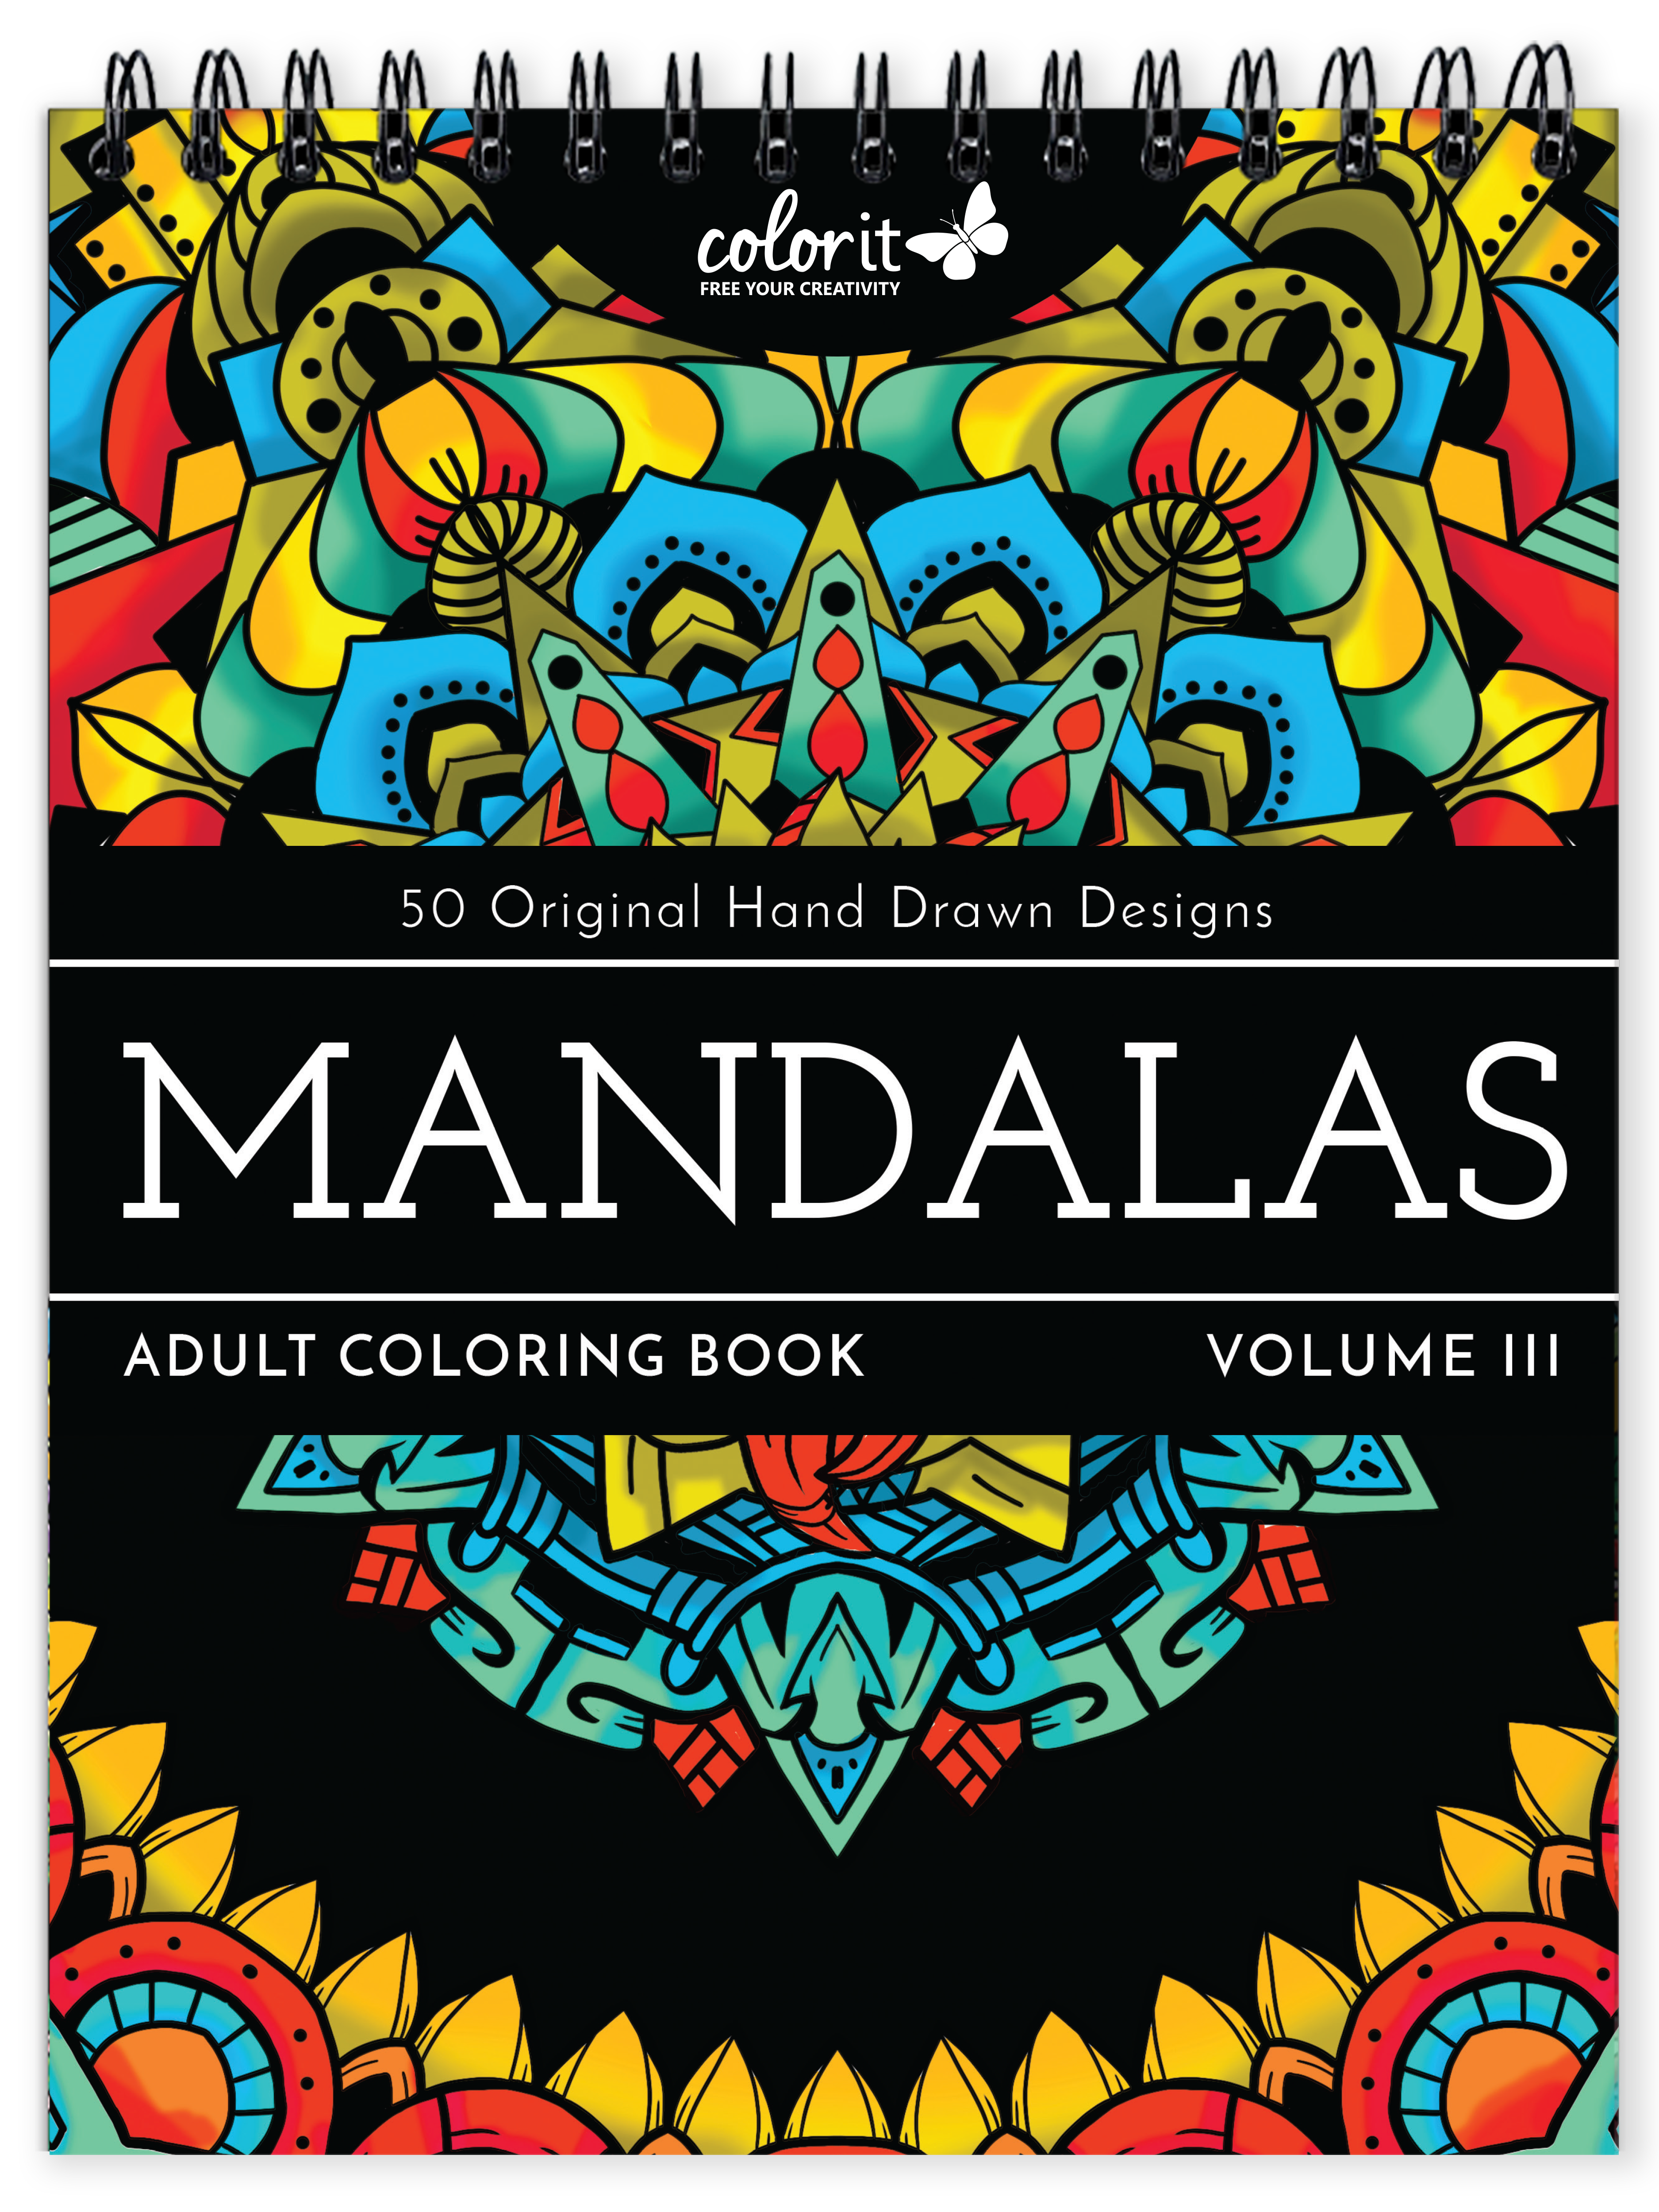 Designer Series Adult Coloring Books Lot 3 Places to Color, Mandalas, Nature